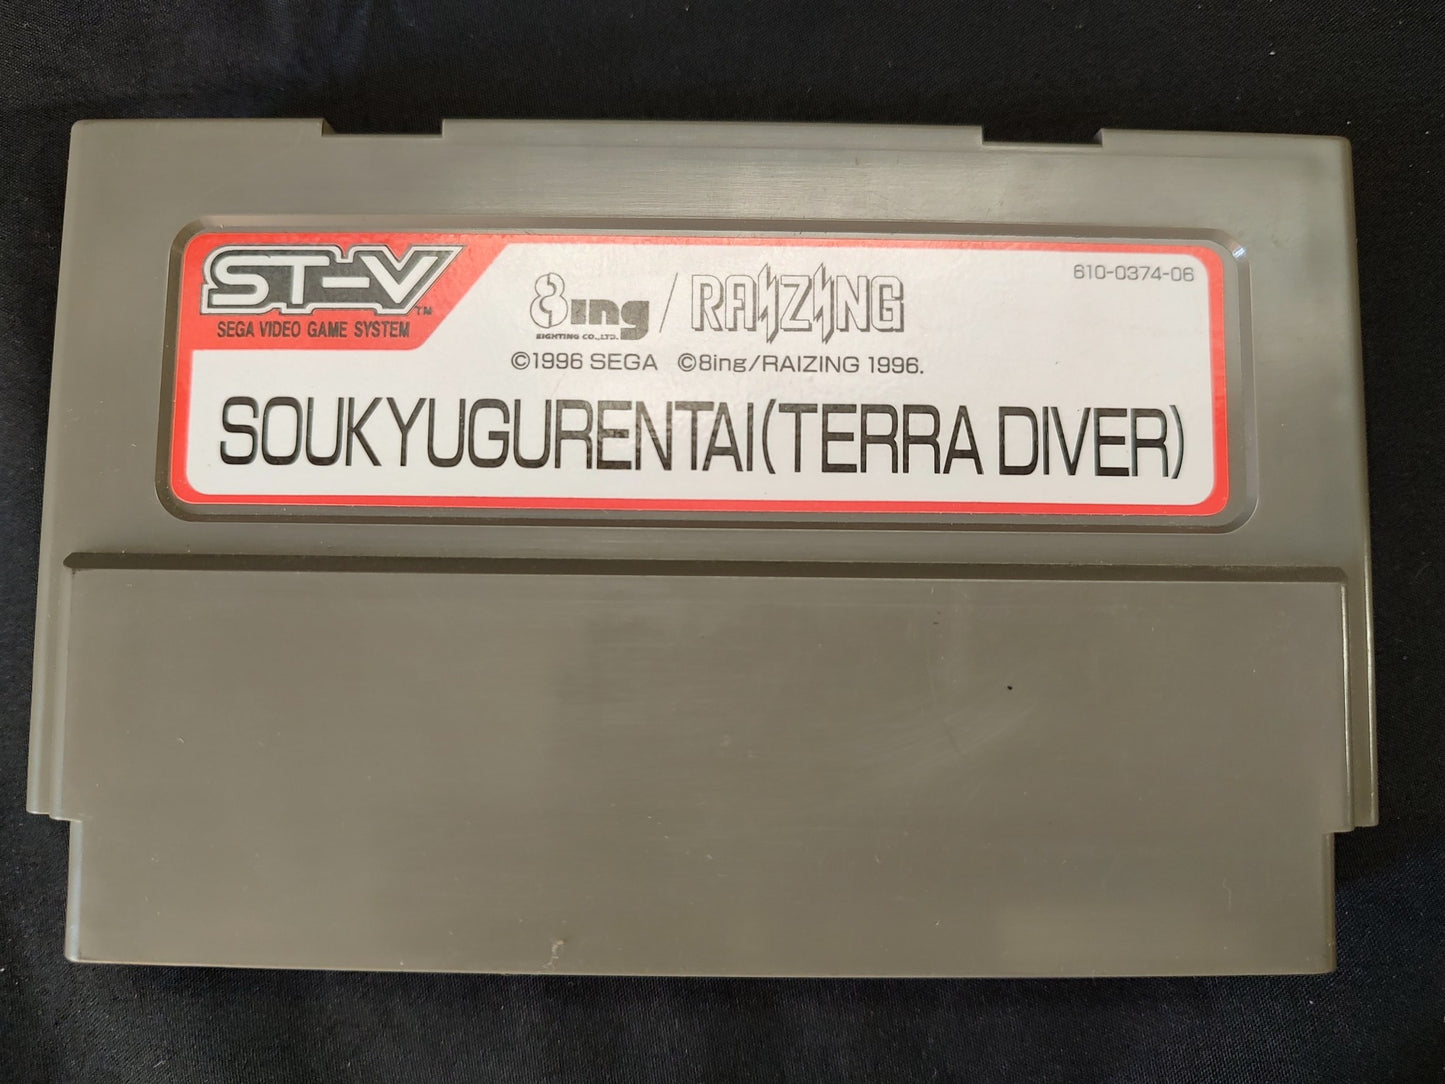 Soukyugurentai (Terra Diver) and SEGA STV System JAMMA Motherboard set-f1101-